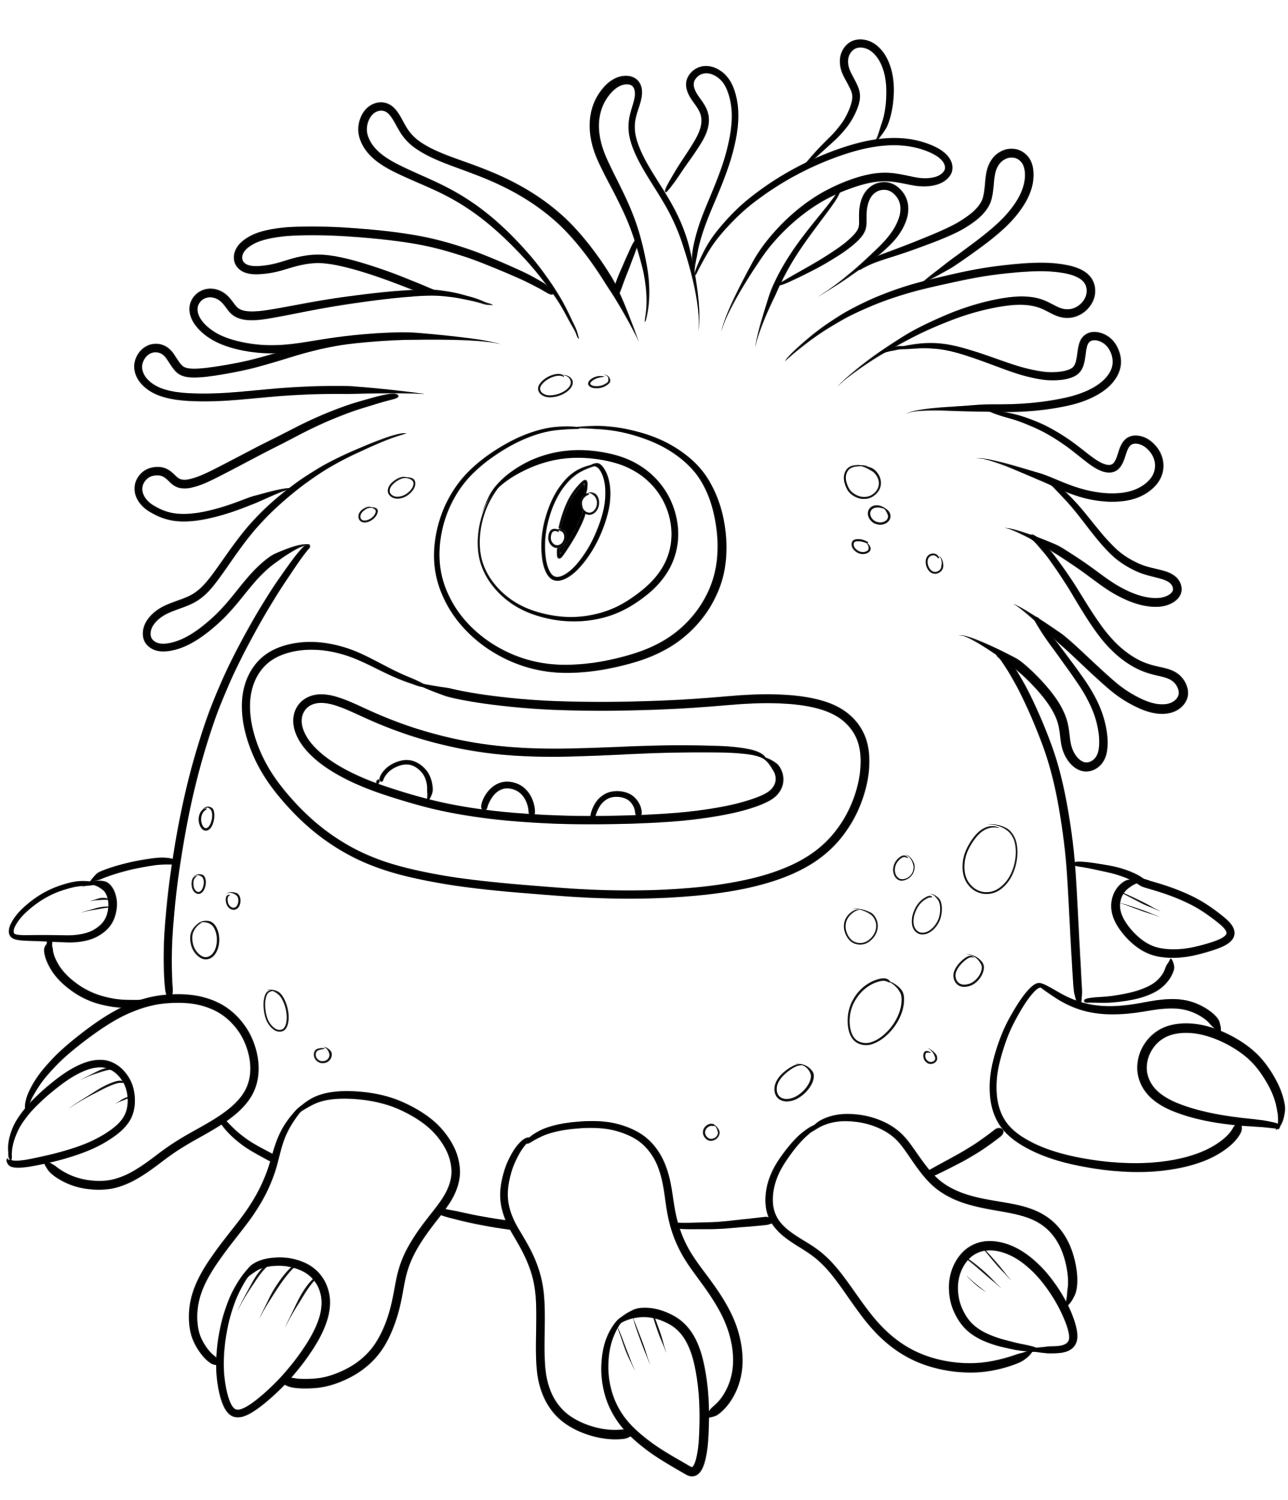 Disegno My Singing Monsters 01 di My Singing Monsters da stampare e colorare